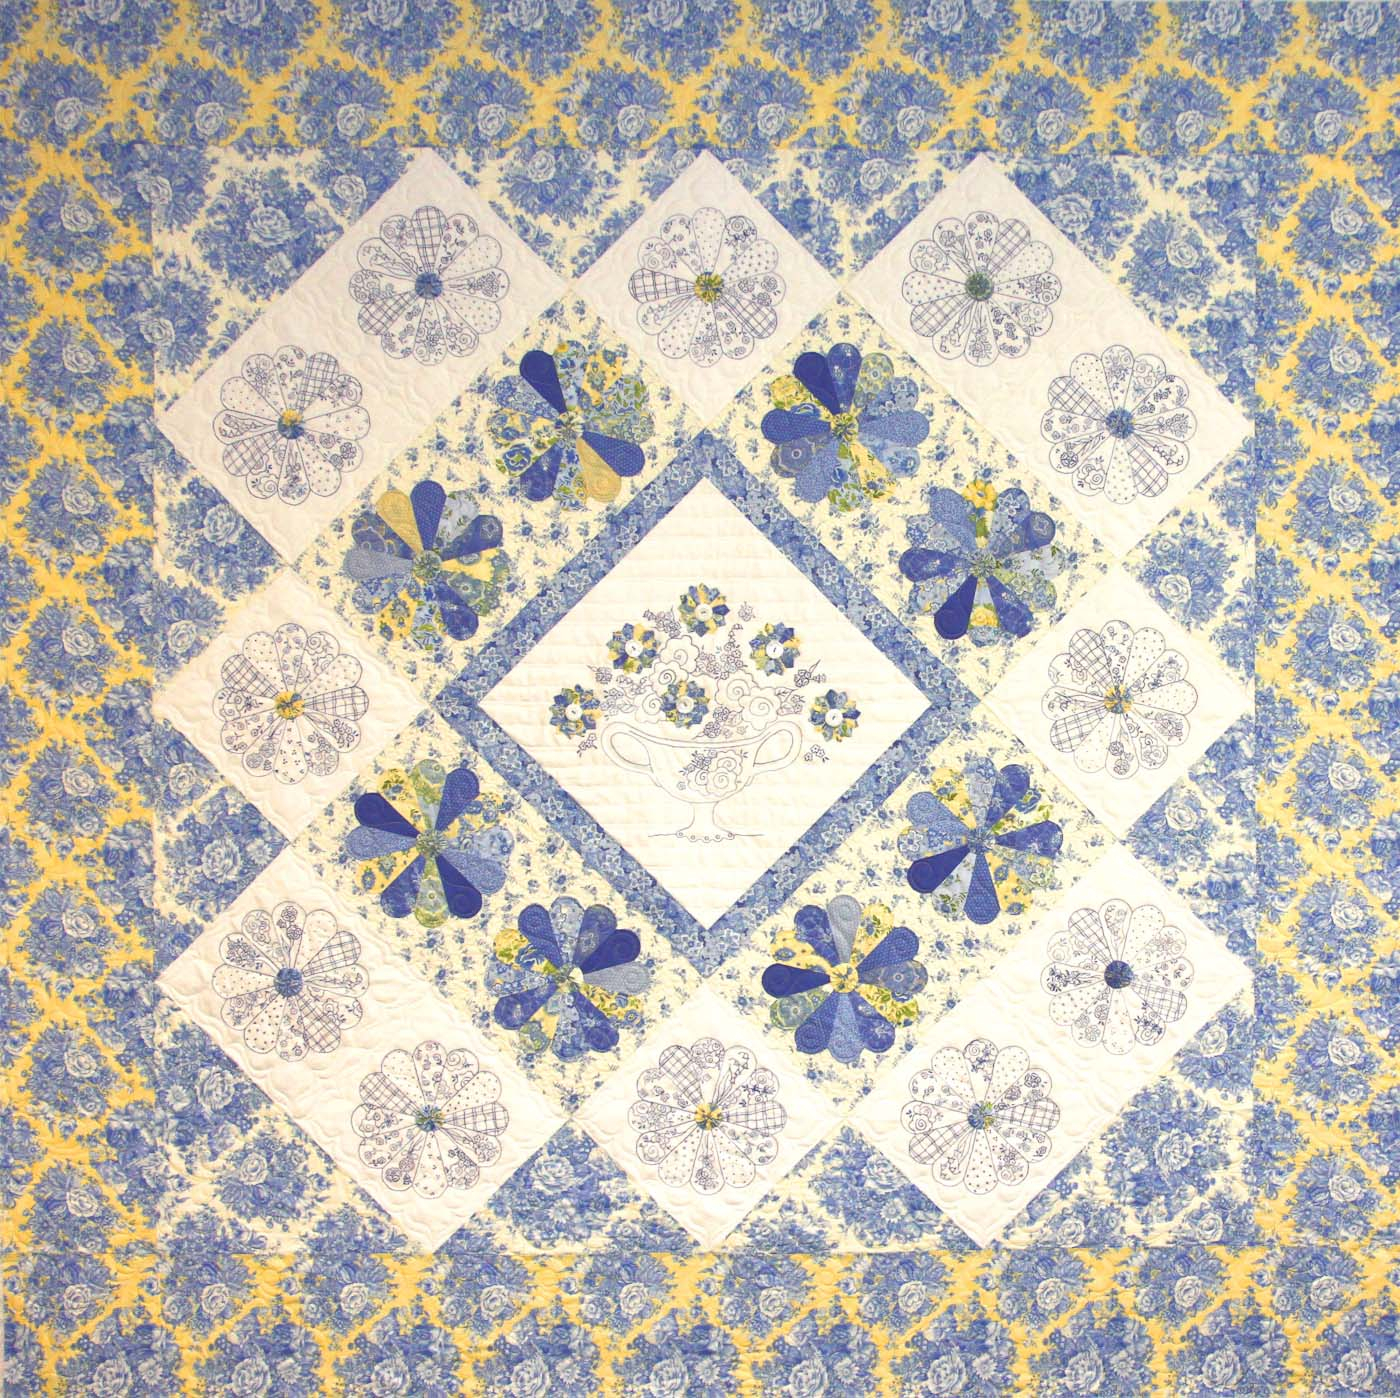 Embroidery Quilt Patterns Susans Dresden Garden